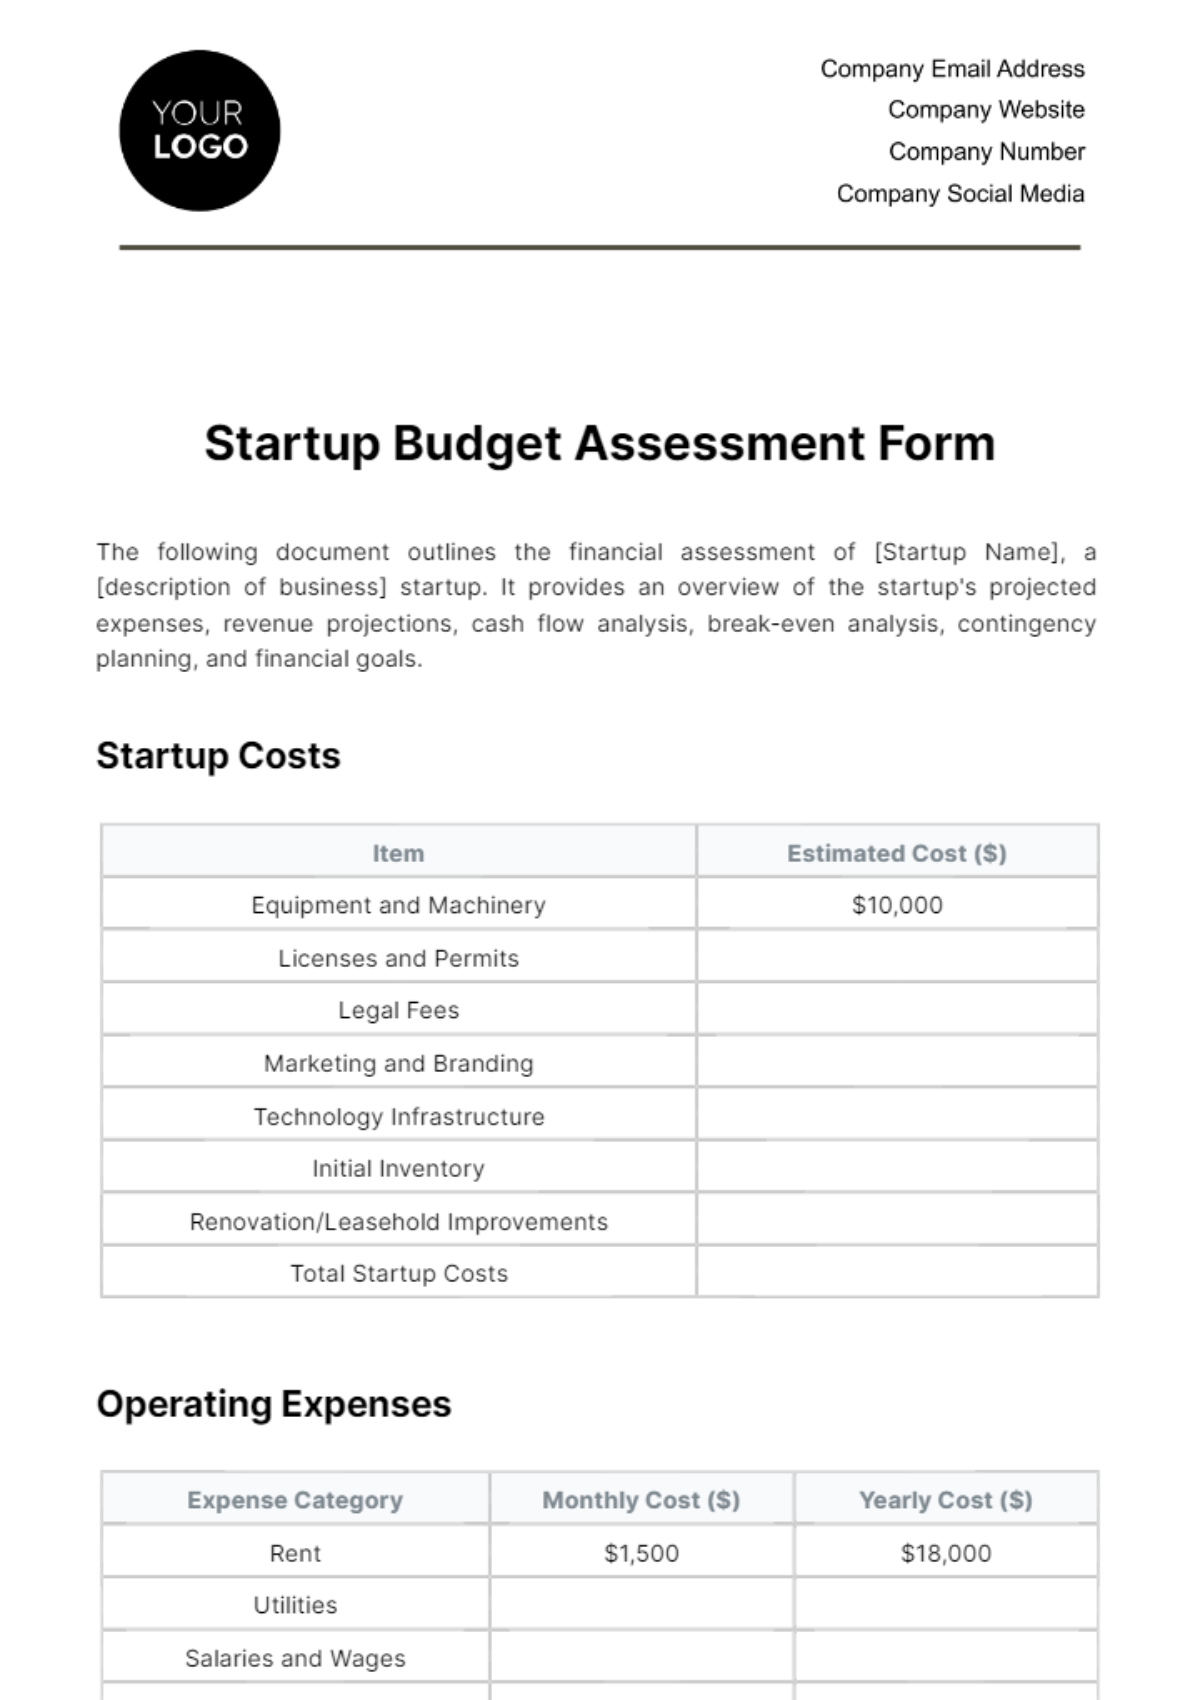 Startup Budget Assessment Form Template